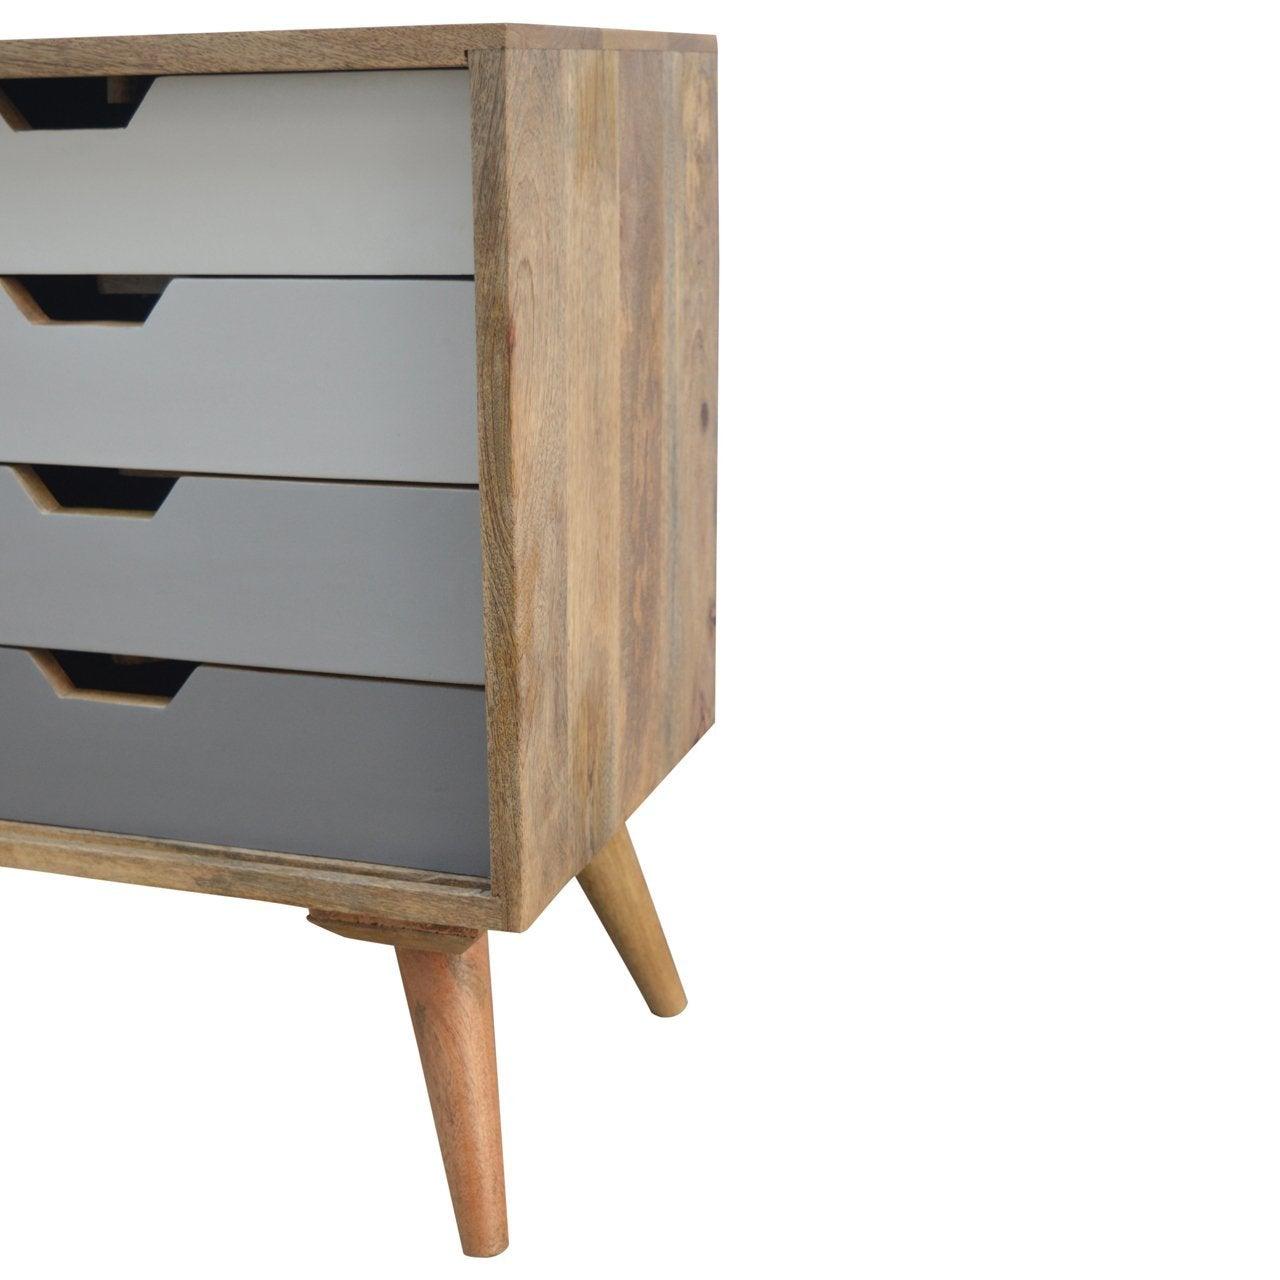 Nordic sliding cabinet with 4 drawers - crimblefest furniture - image 8